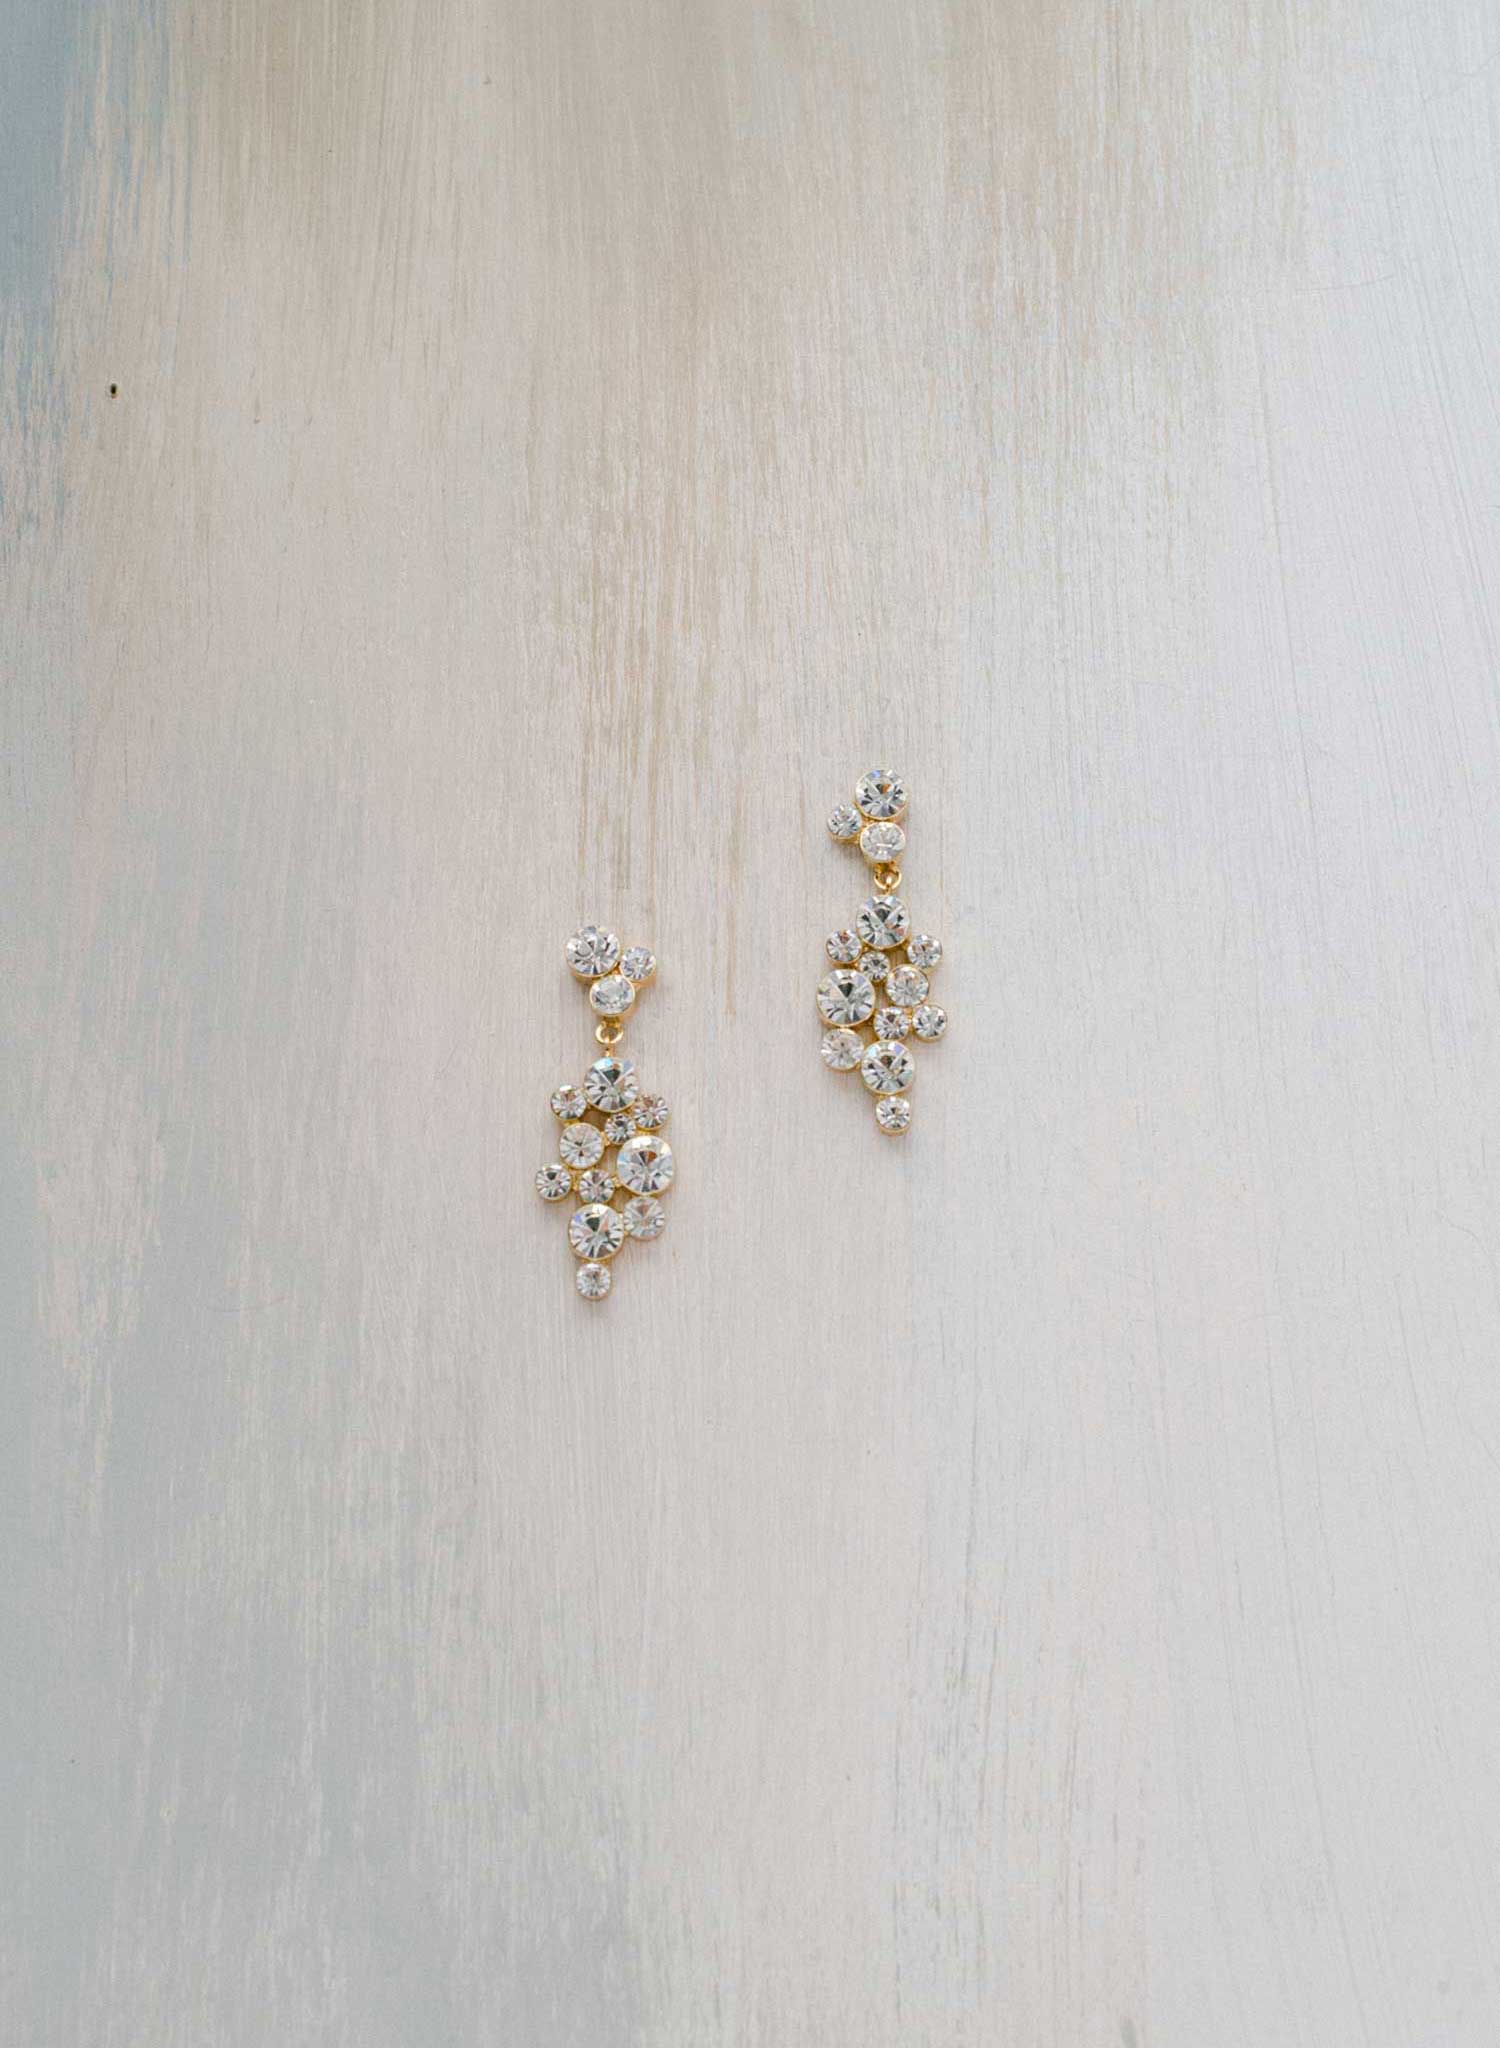 Champagne bubbles petite drop earrings - Style #2438